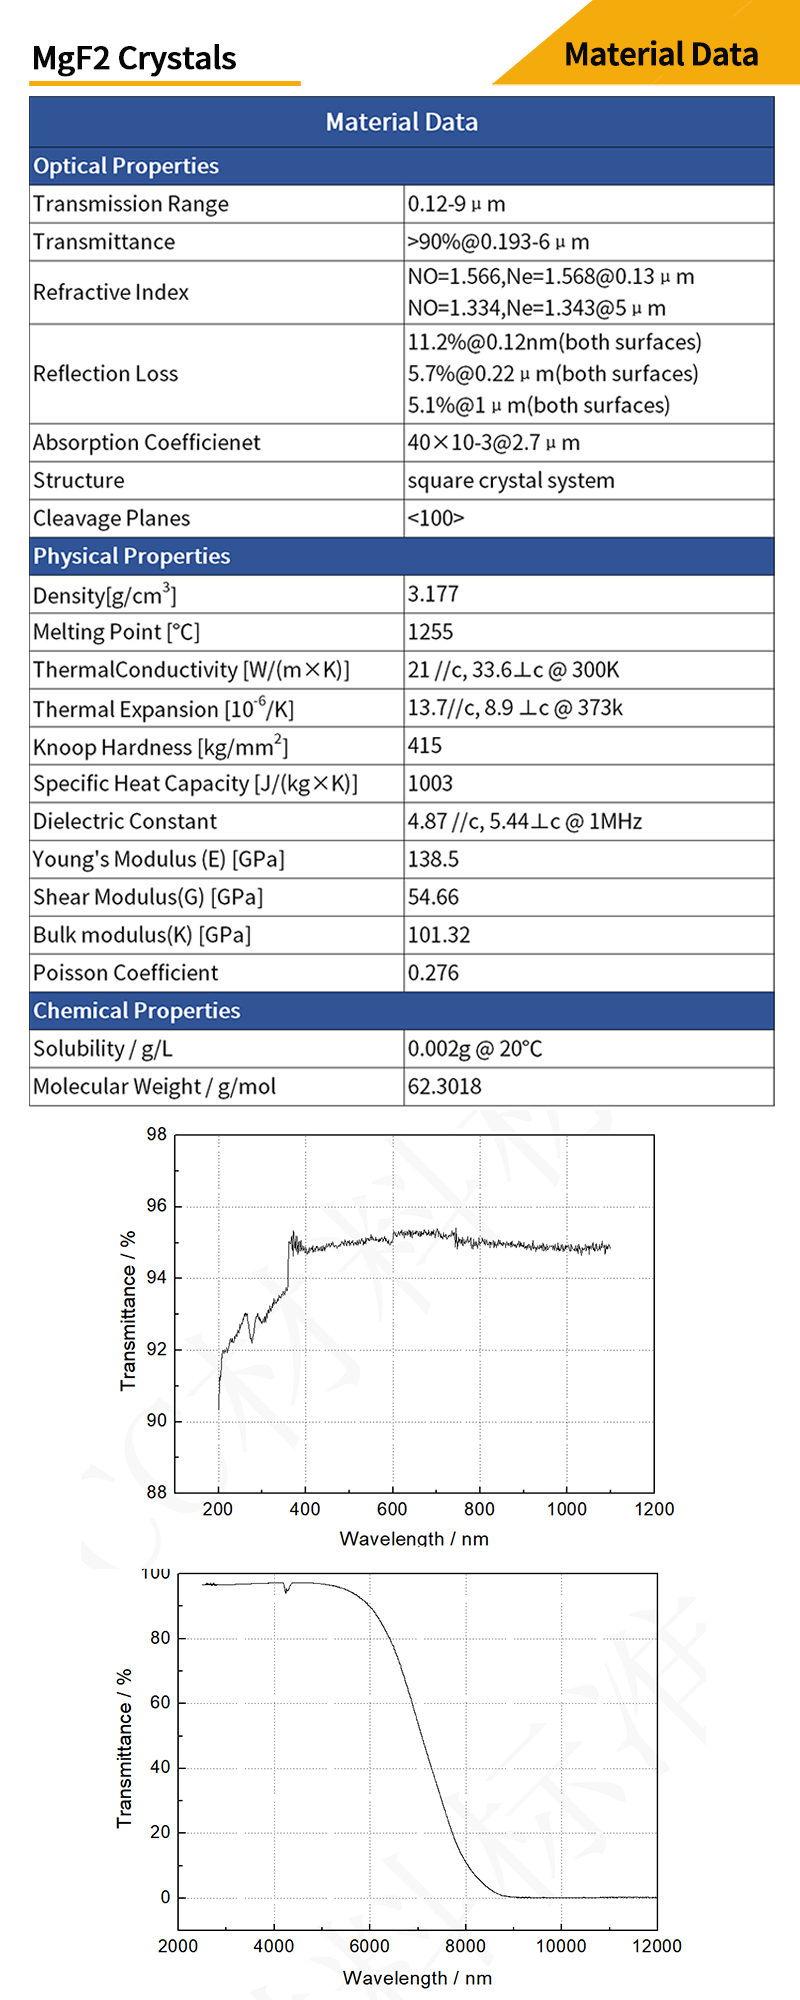 Magnesium fluoride rectangular window material data and transmittance curves